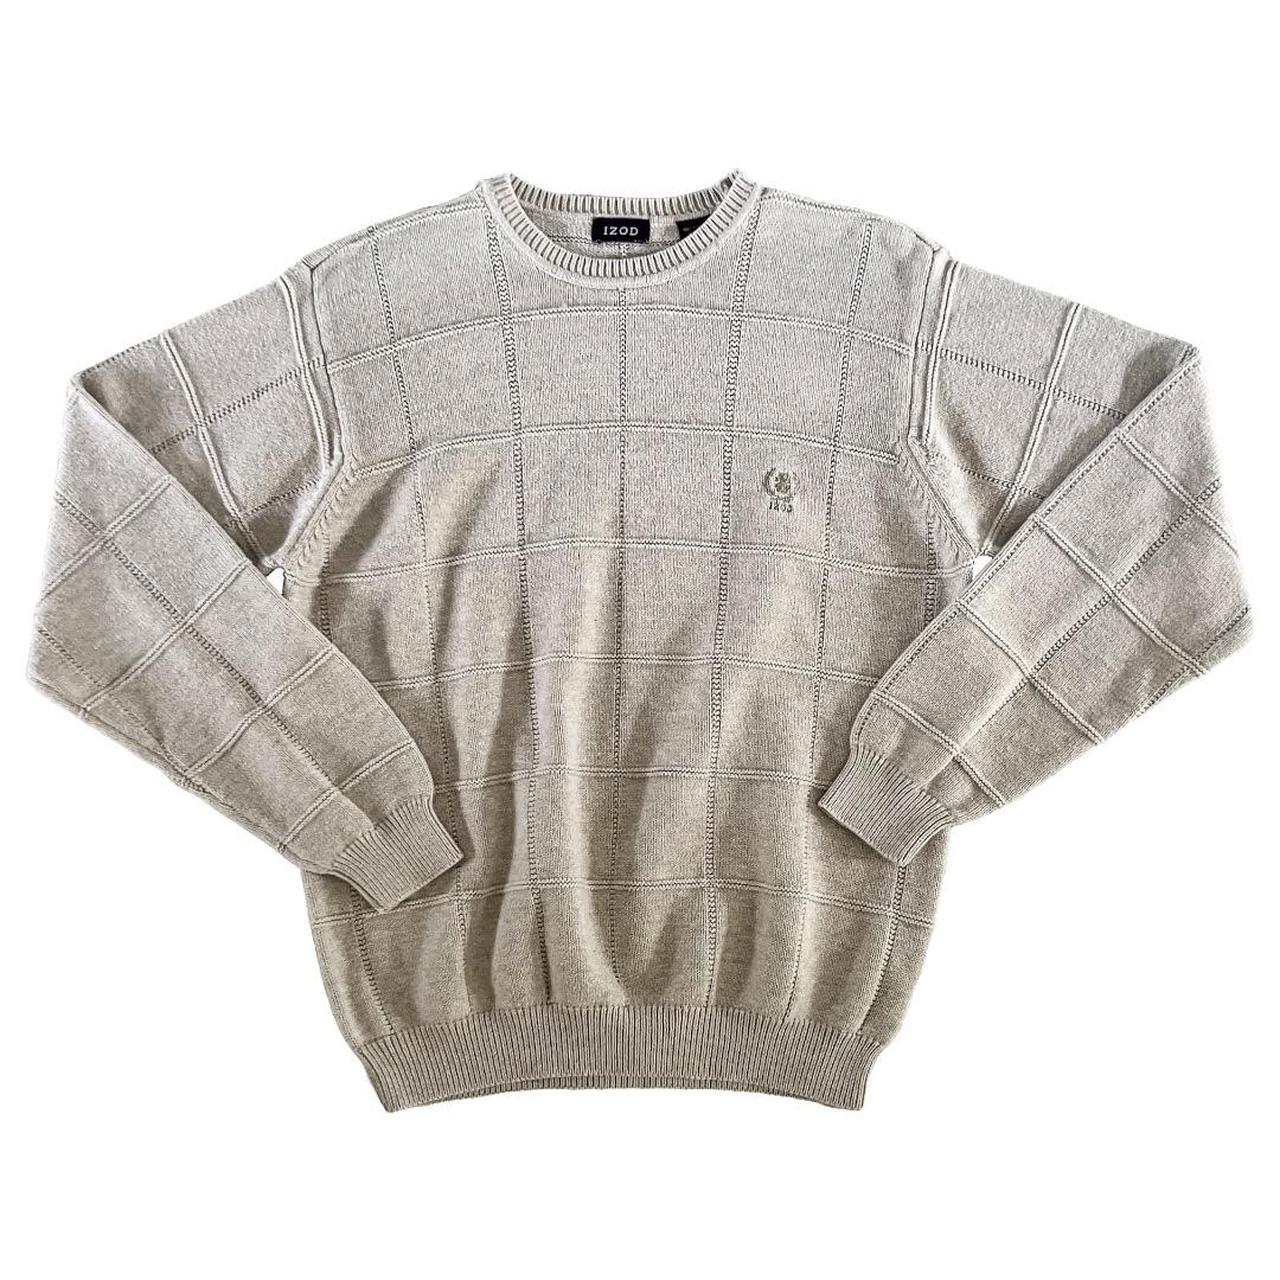 Izod Knit Sweater cream/off white crewneck sweater... - Depop